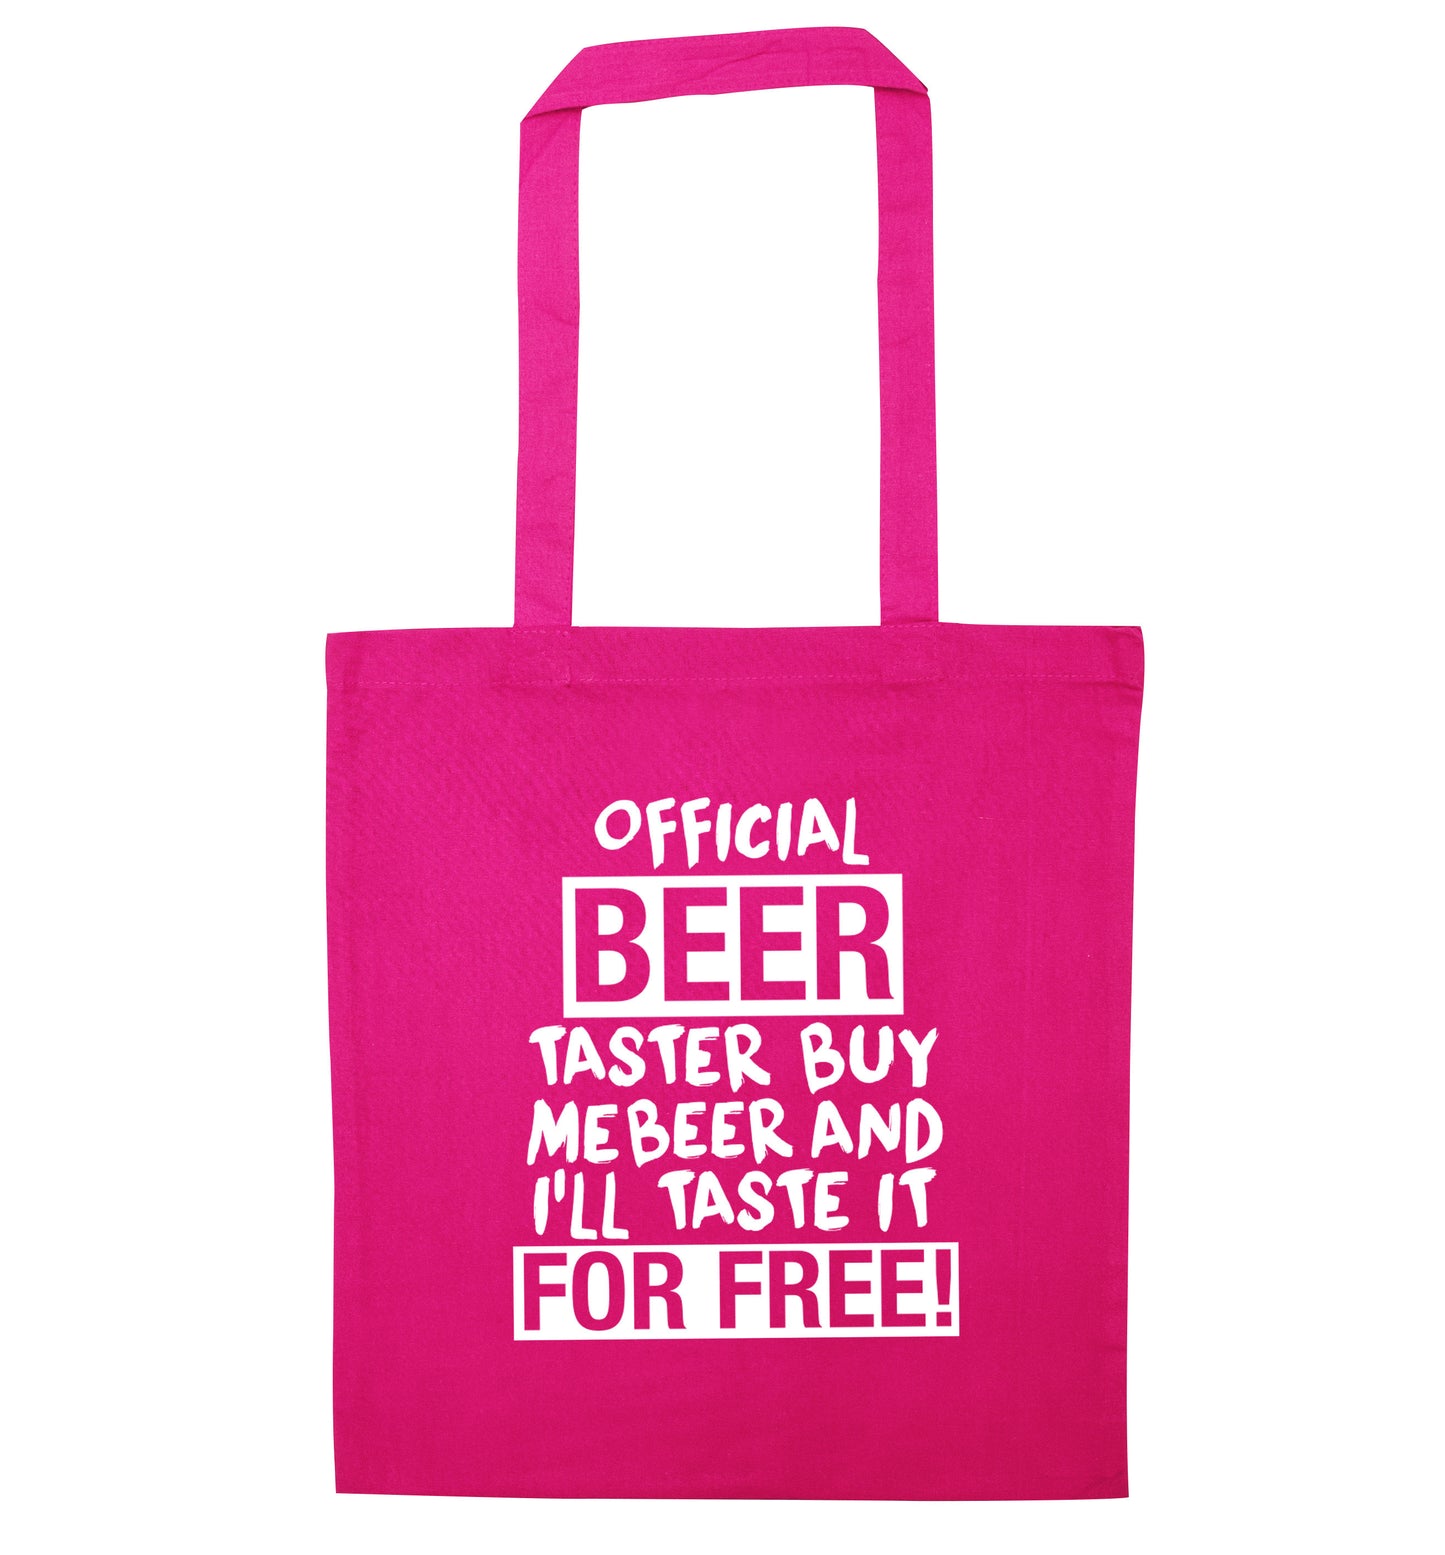 Official beer taster buy me beer and I'll taste it for free! pink tote bag